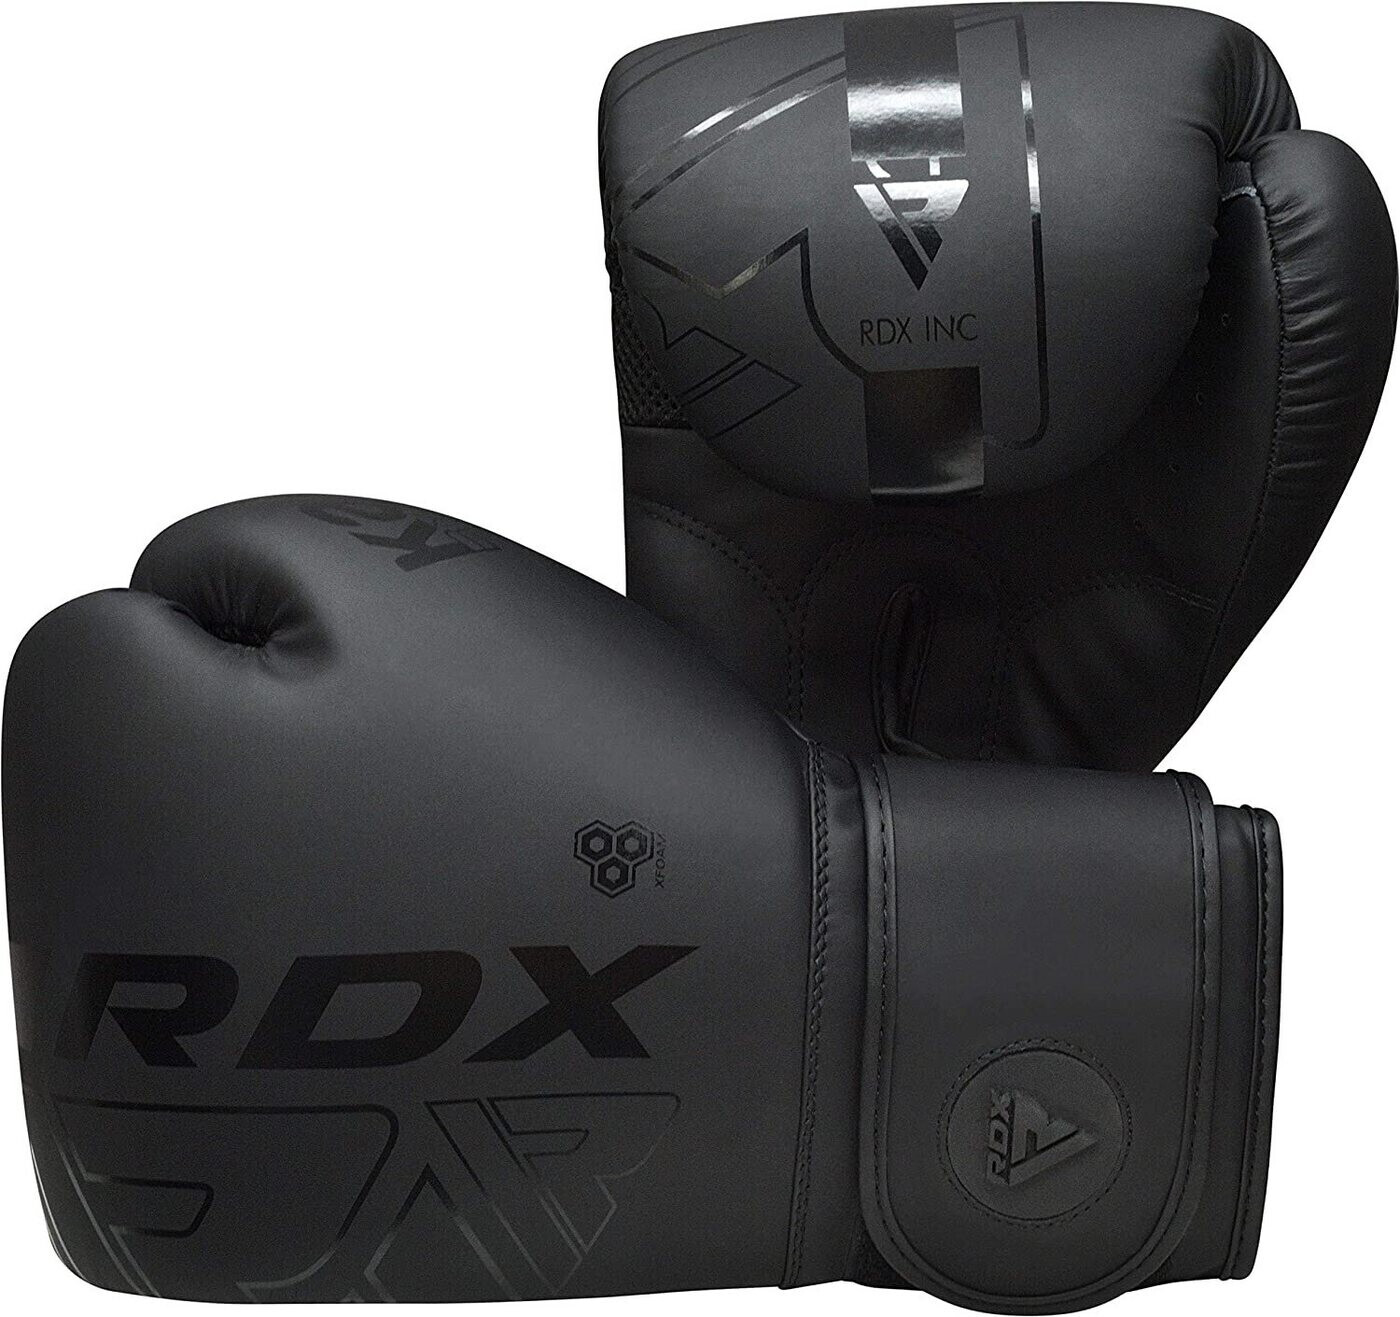 RDX F6 Kara Boxhandschuhe schwarz/schwarz ab 37,40 € Preisvergleich bei idealo.de